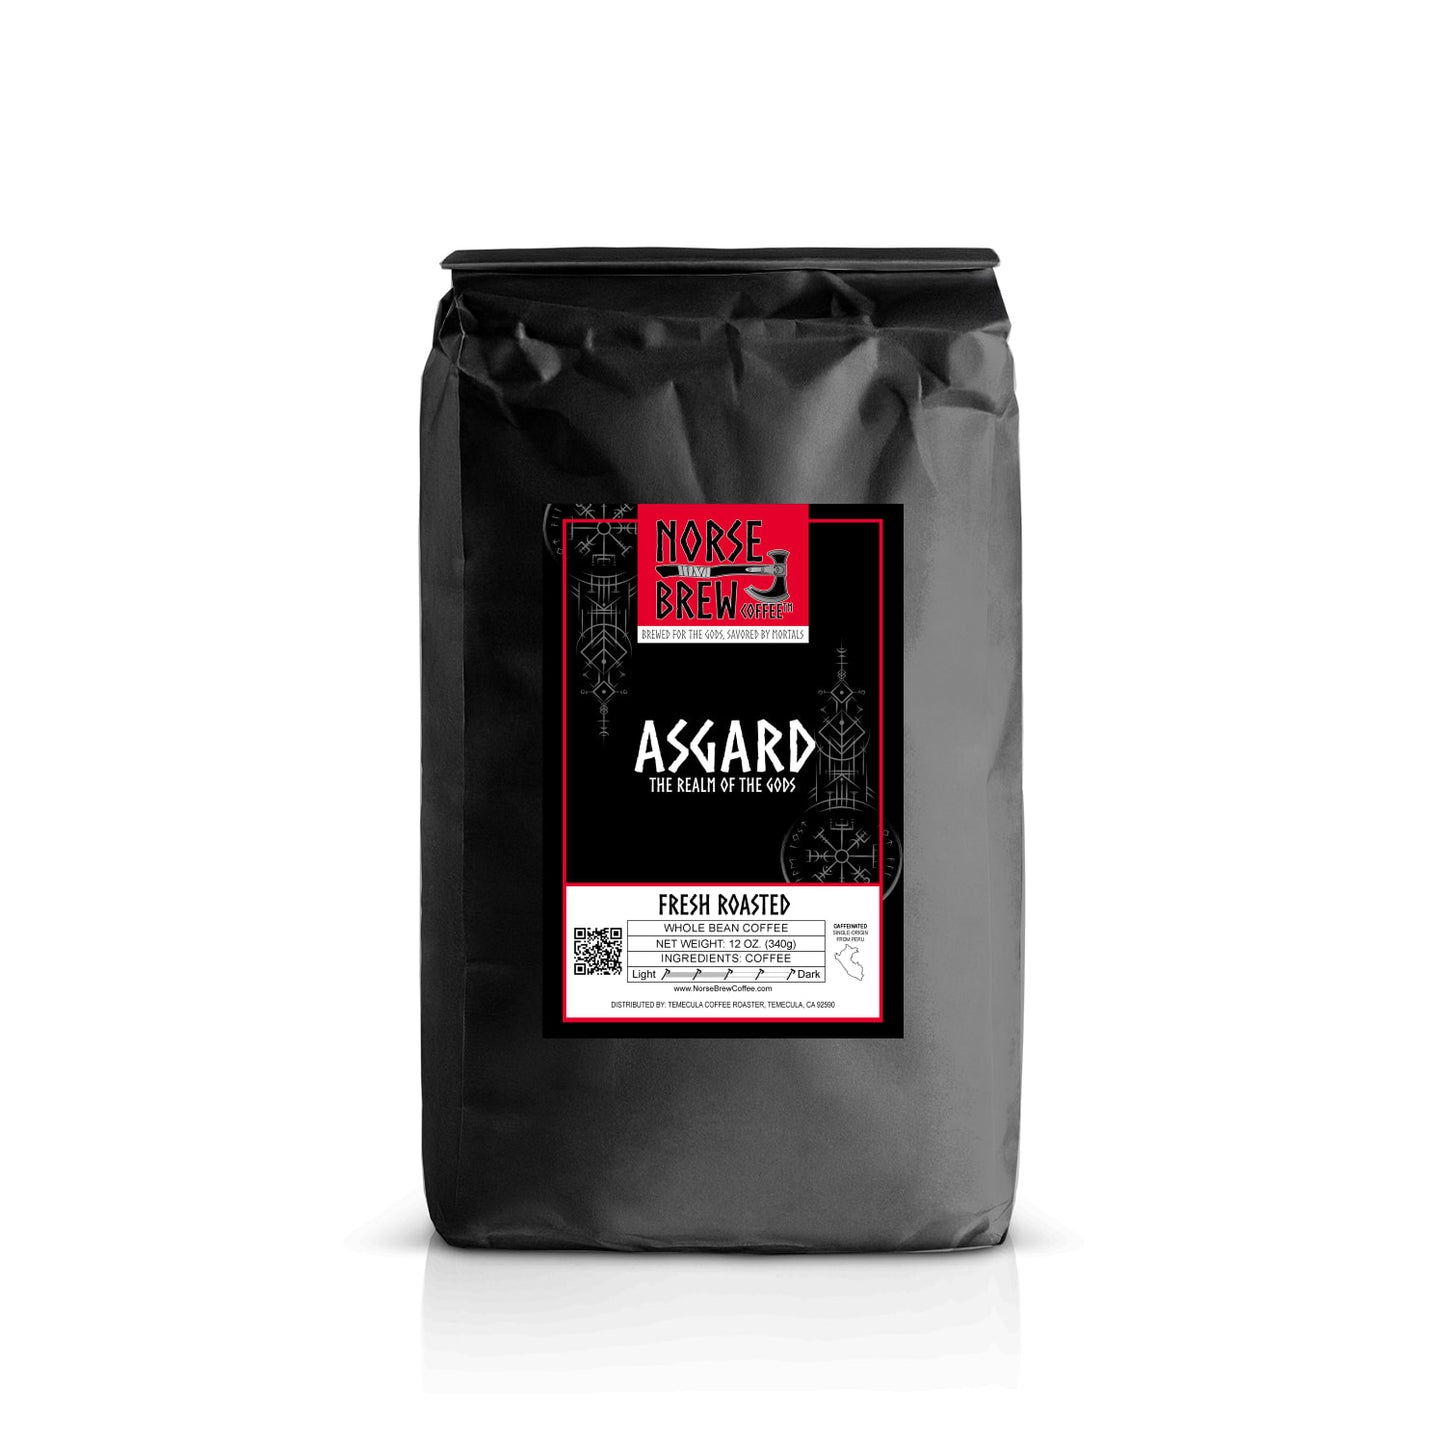 12 oz Bag of Asgard Medium Roast Whole Bean Coffee Sourced from Piura, Peru